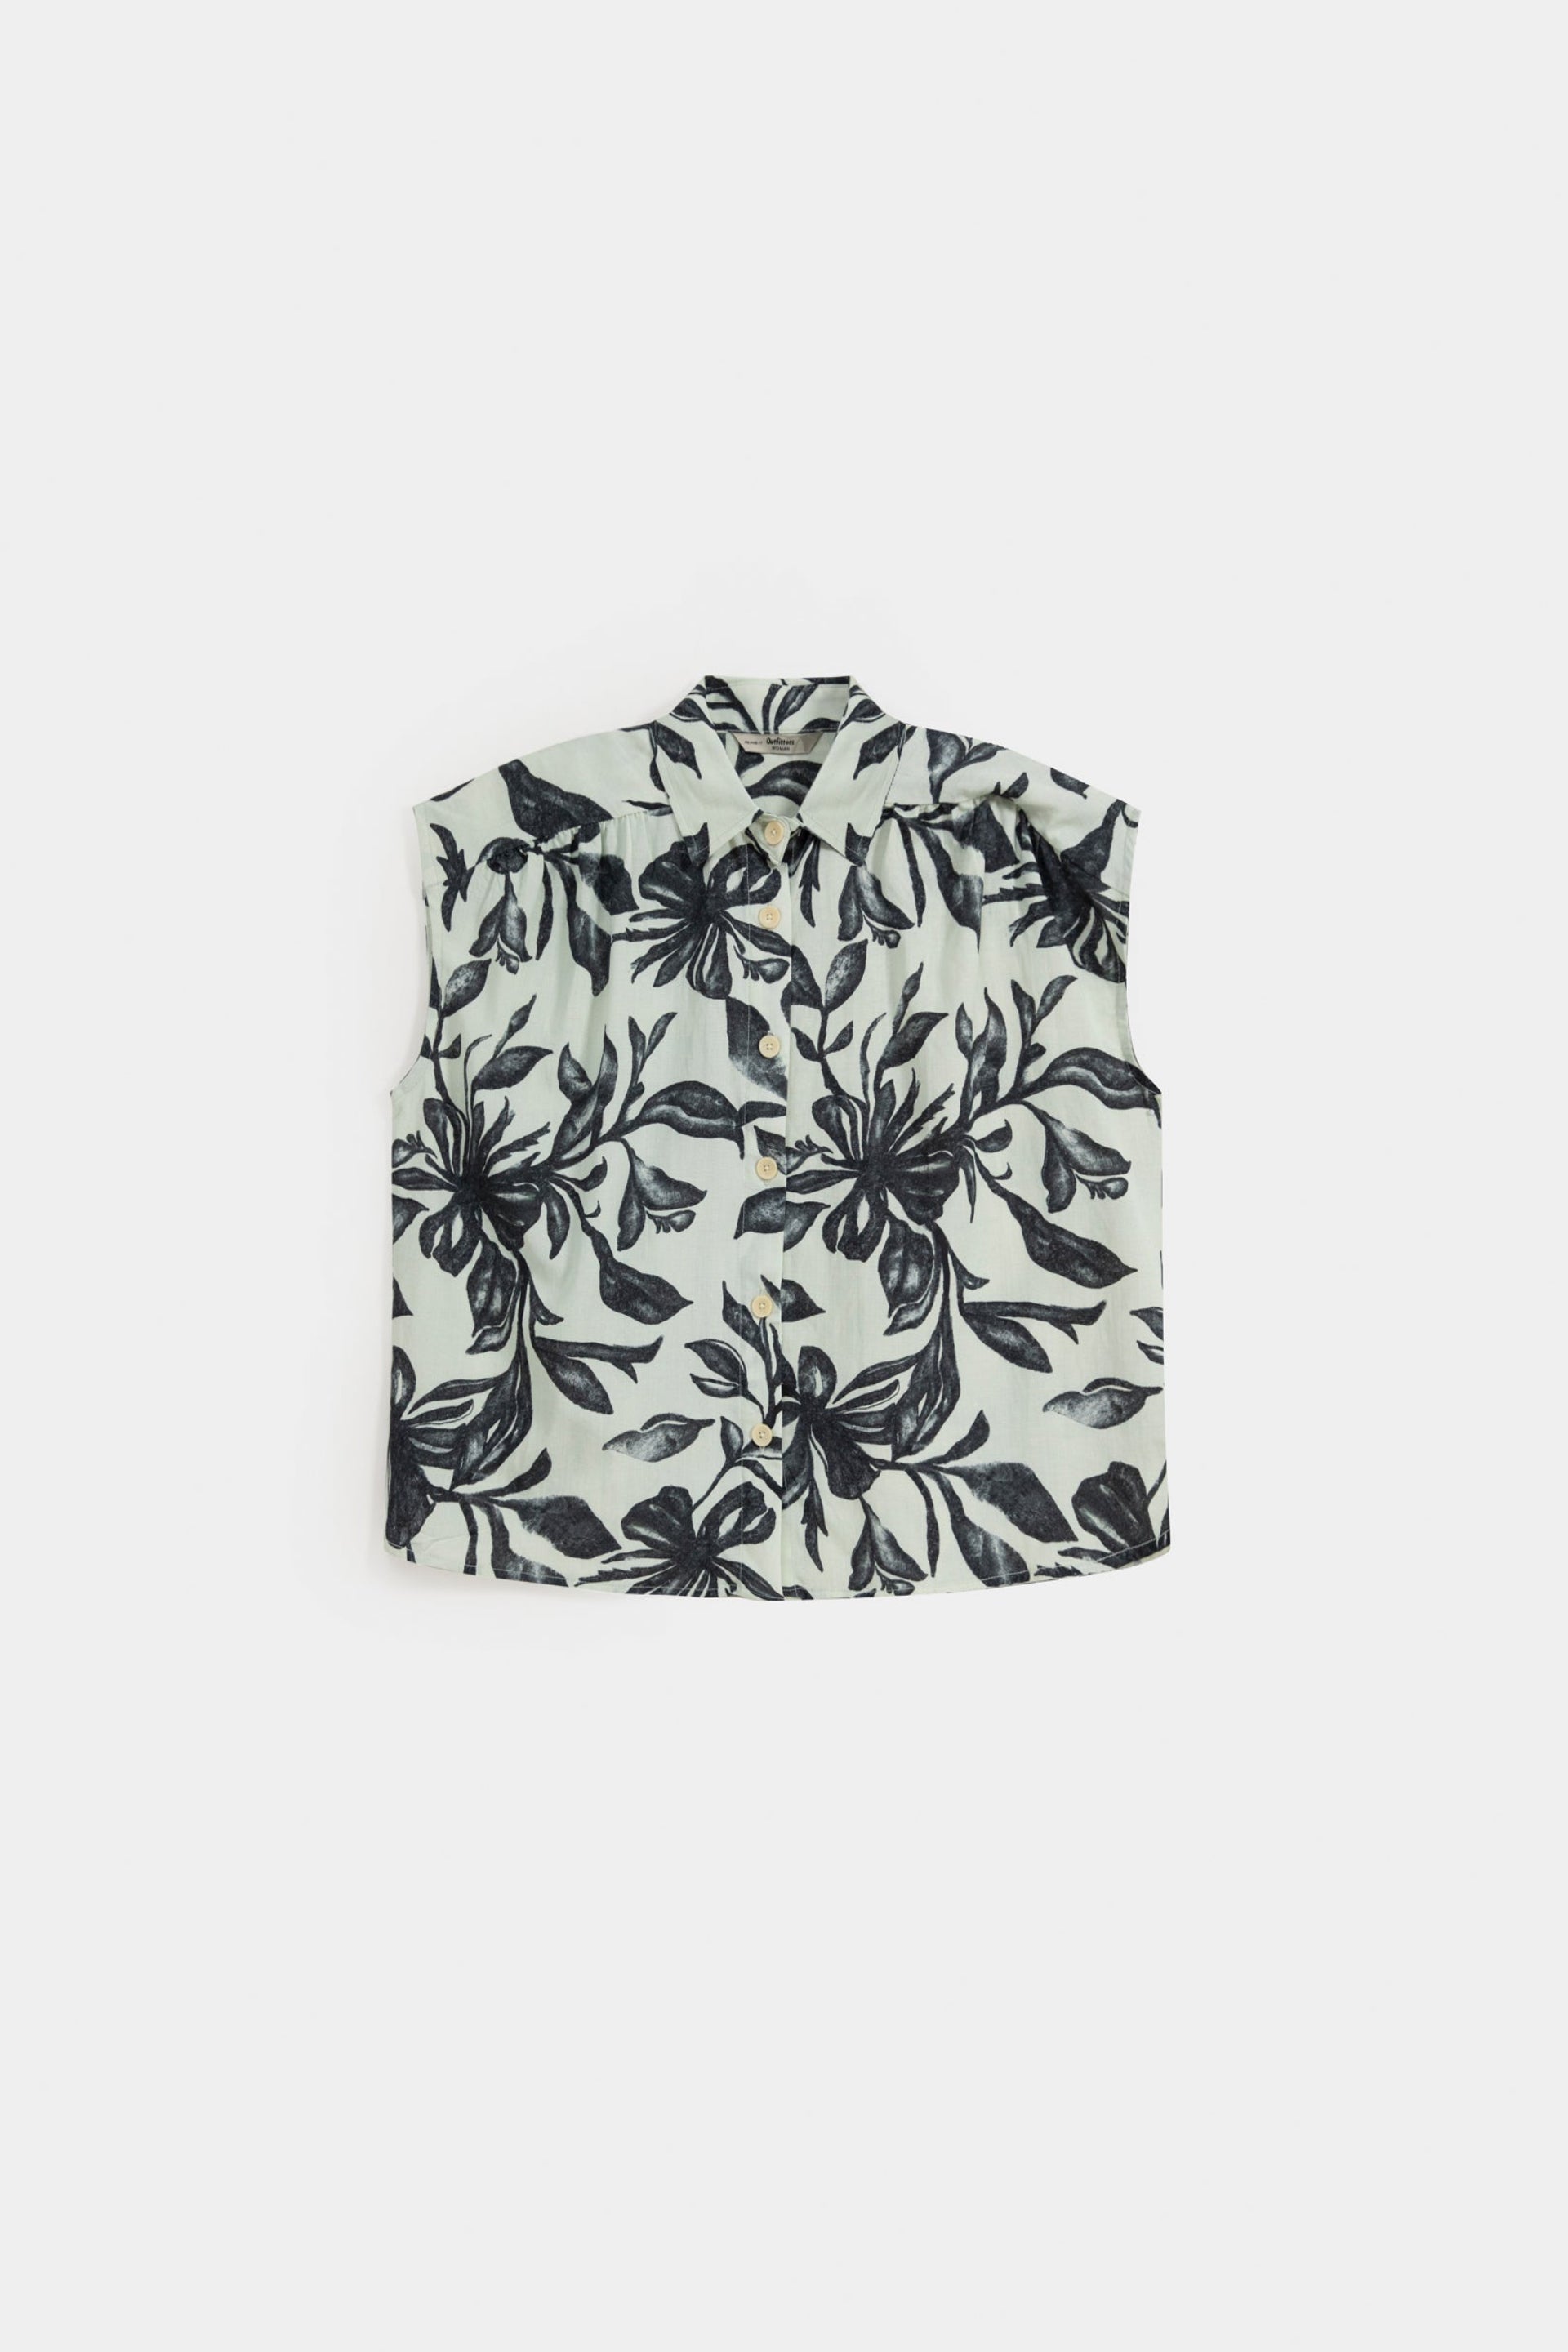 Floral Printed Shirt